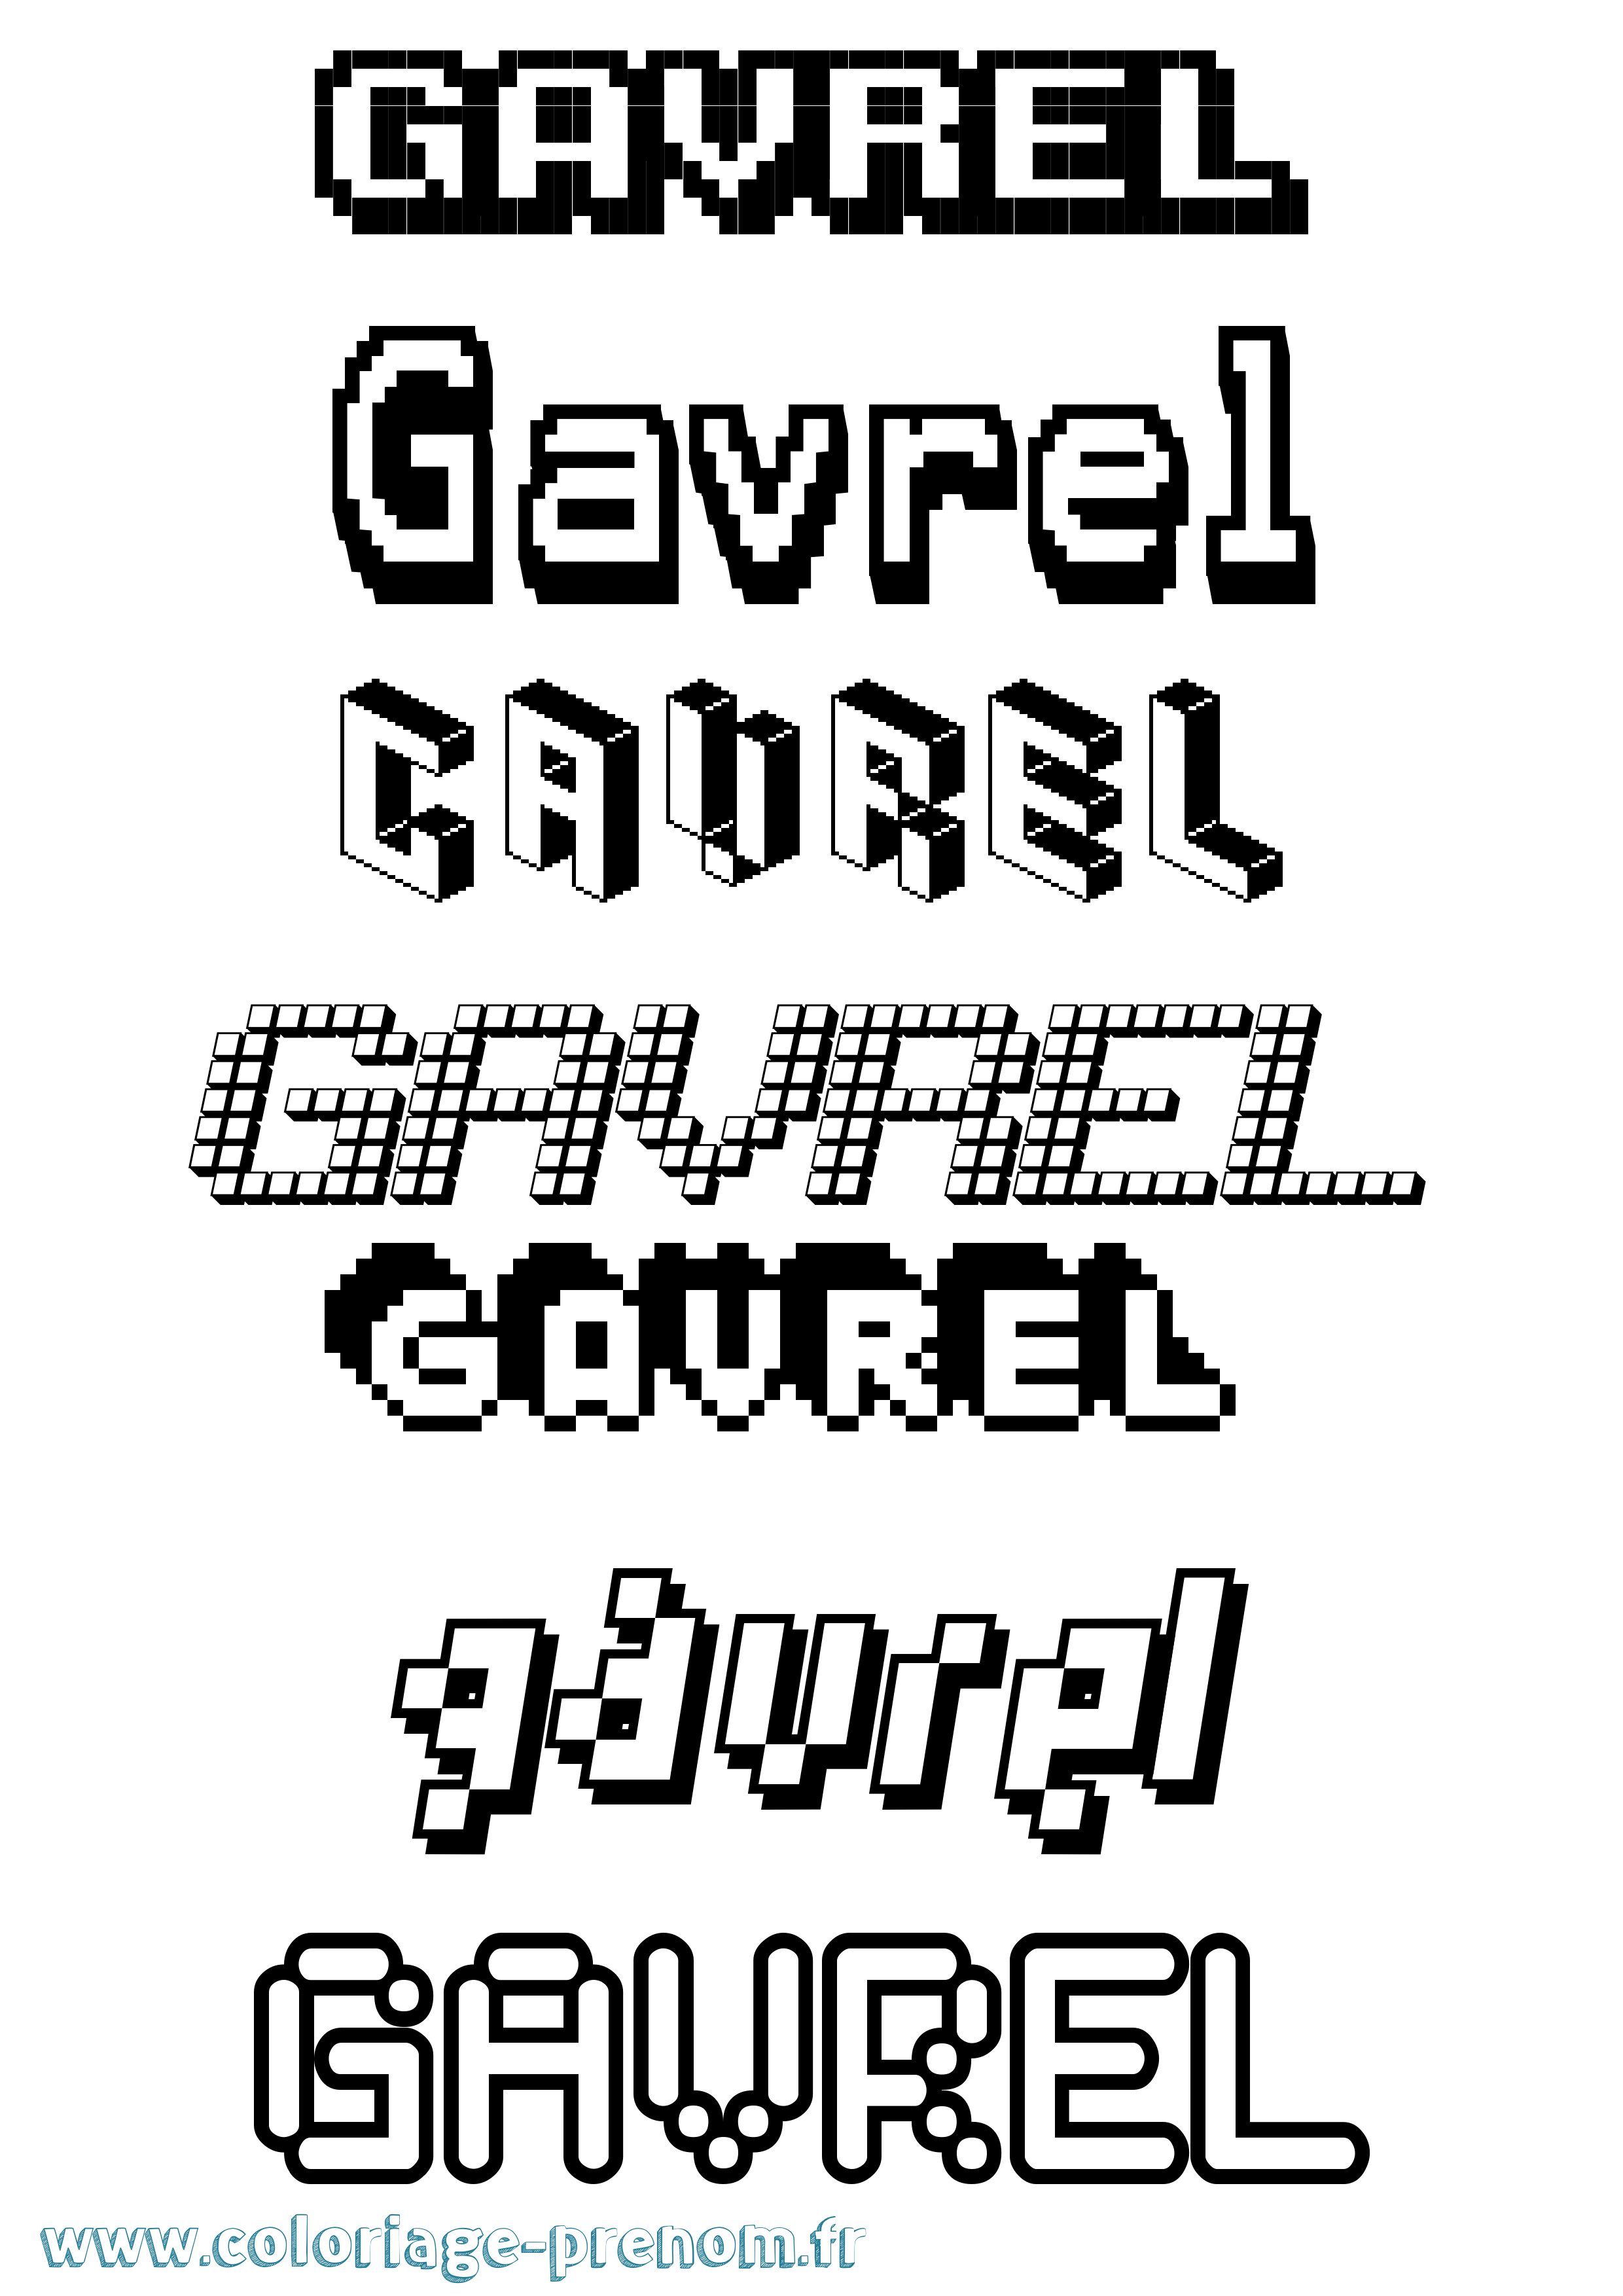 Coloriage prénom Gavrel Pixel